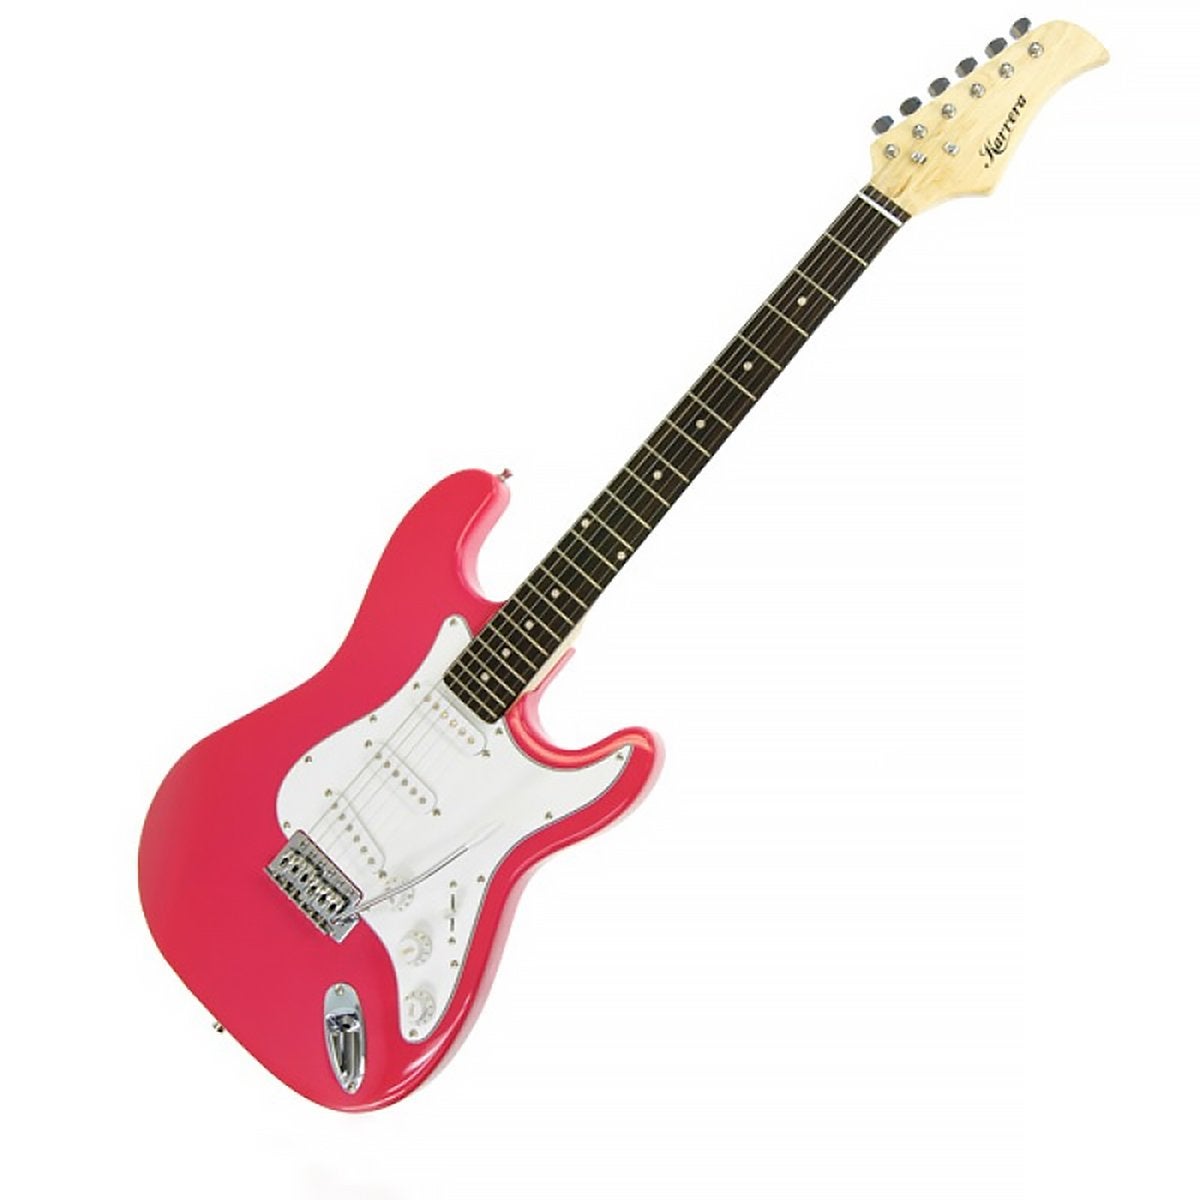 New Karrera Electric Guitar Music String Instrument Pink